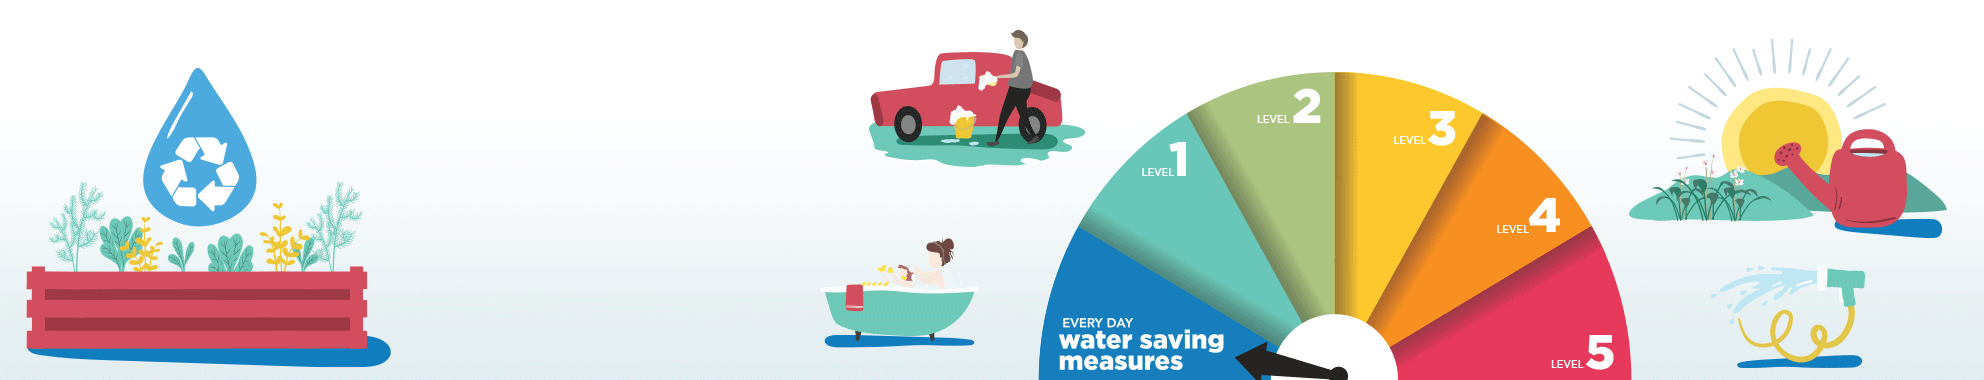 Everyday water saving measures